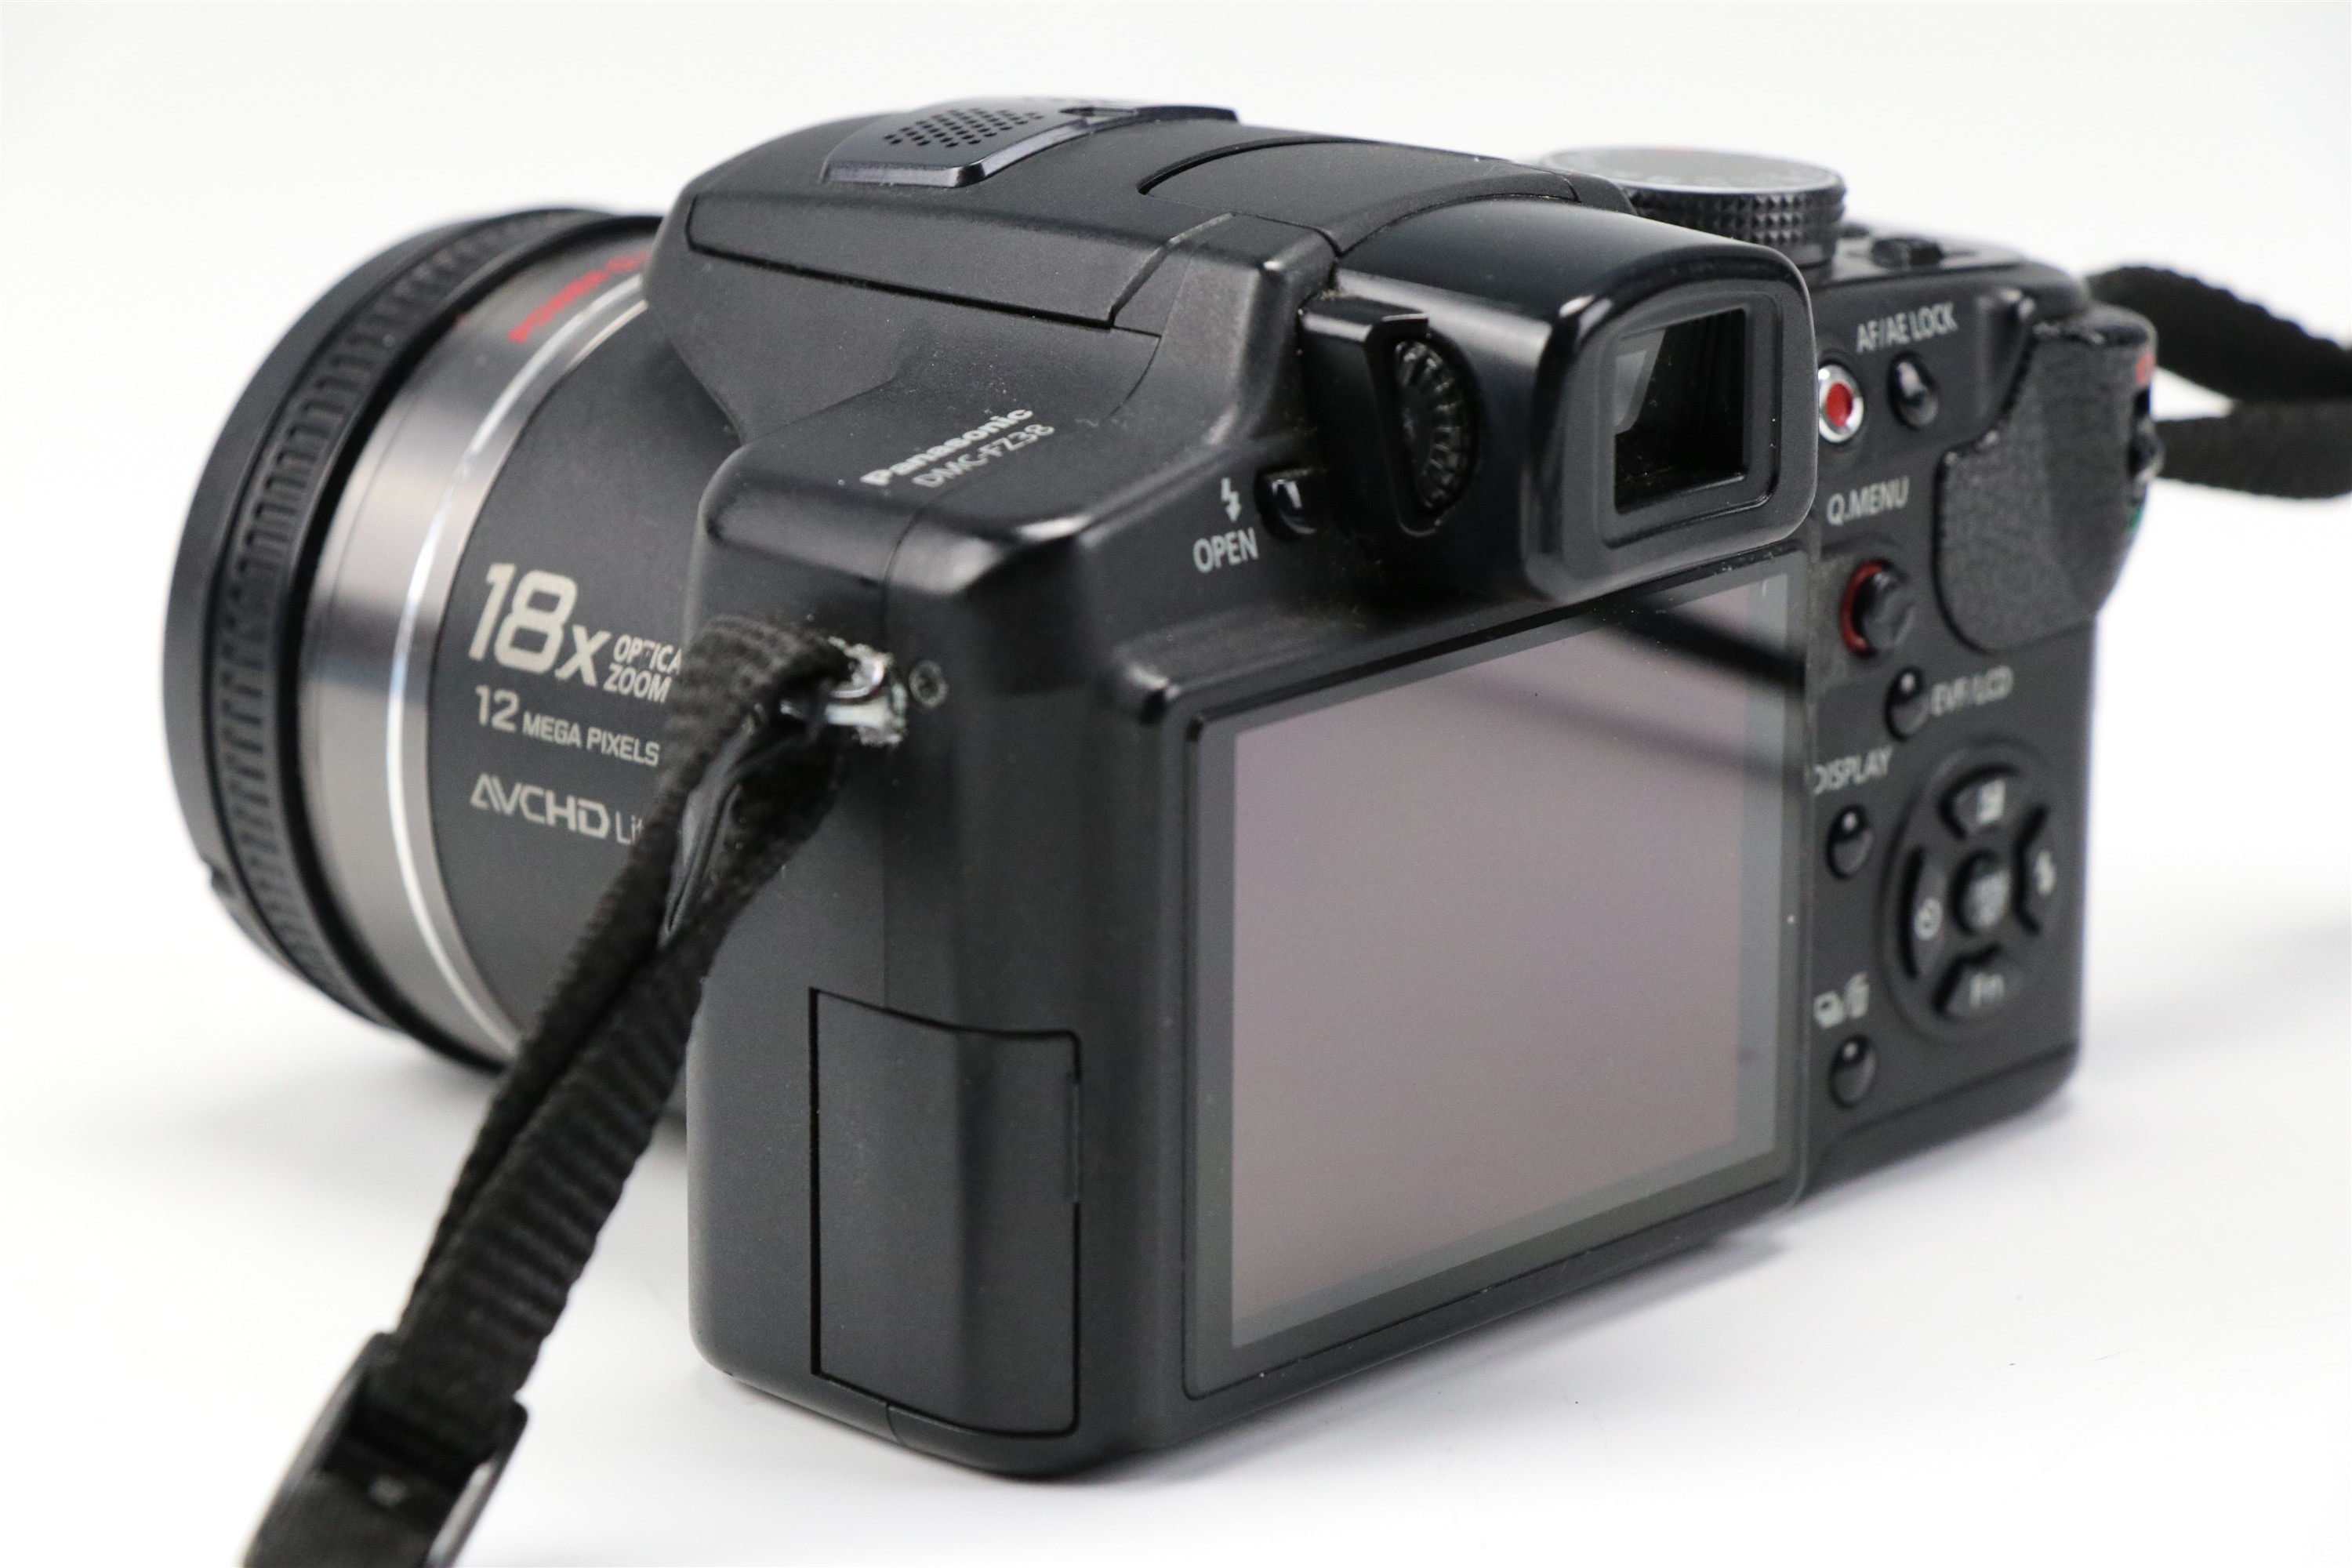 Lumix F238 HD, Canon EOS IX, Canon Digital IXUS 430, Konica Minolta Dimage 25 and Konica C35 EFP - Image 15 of 24